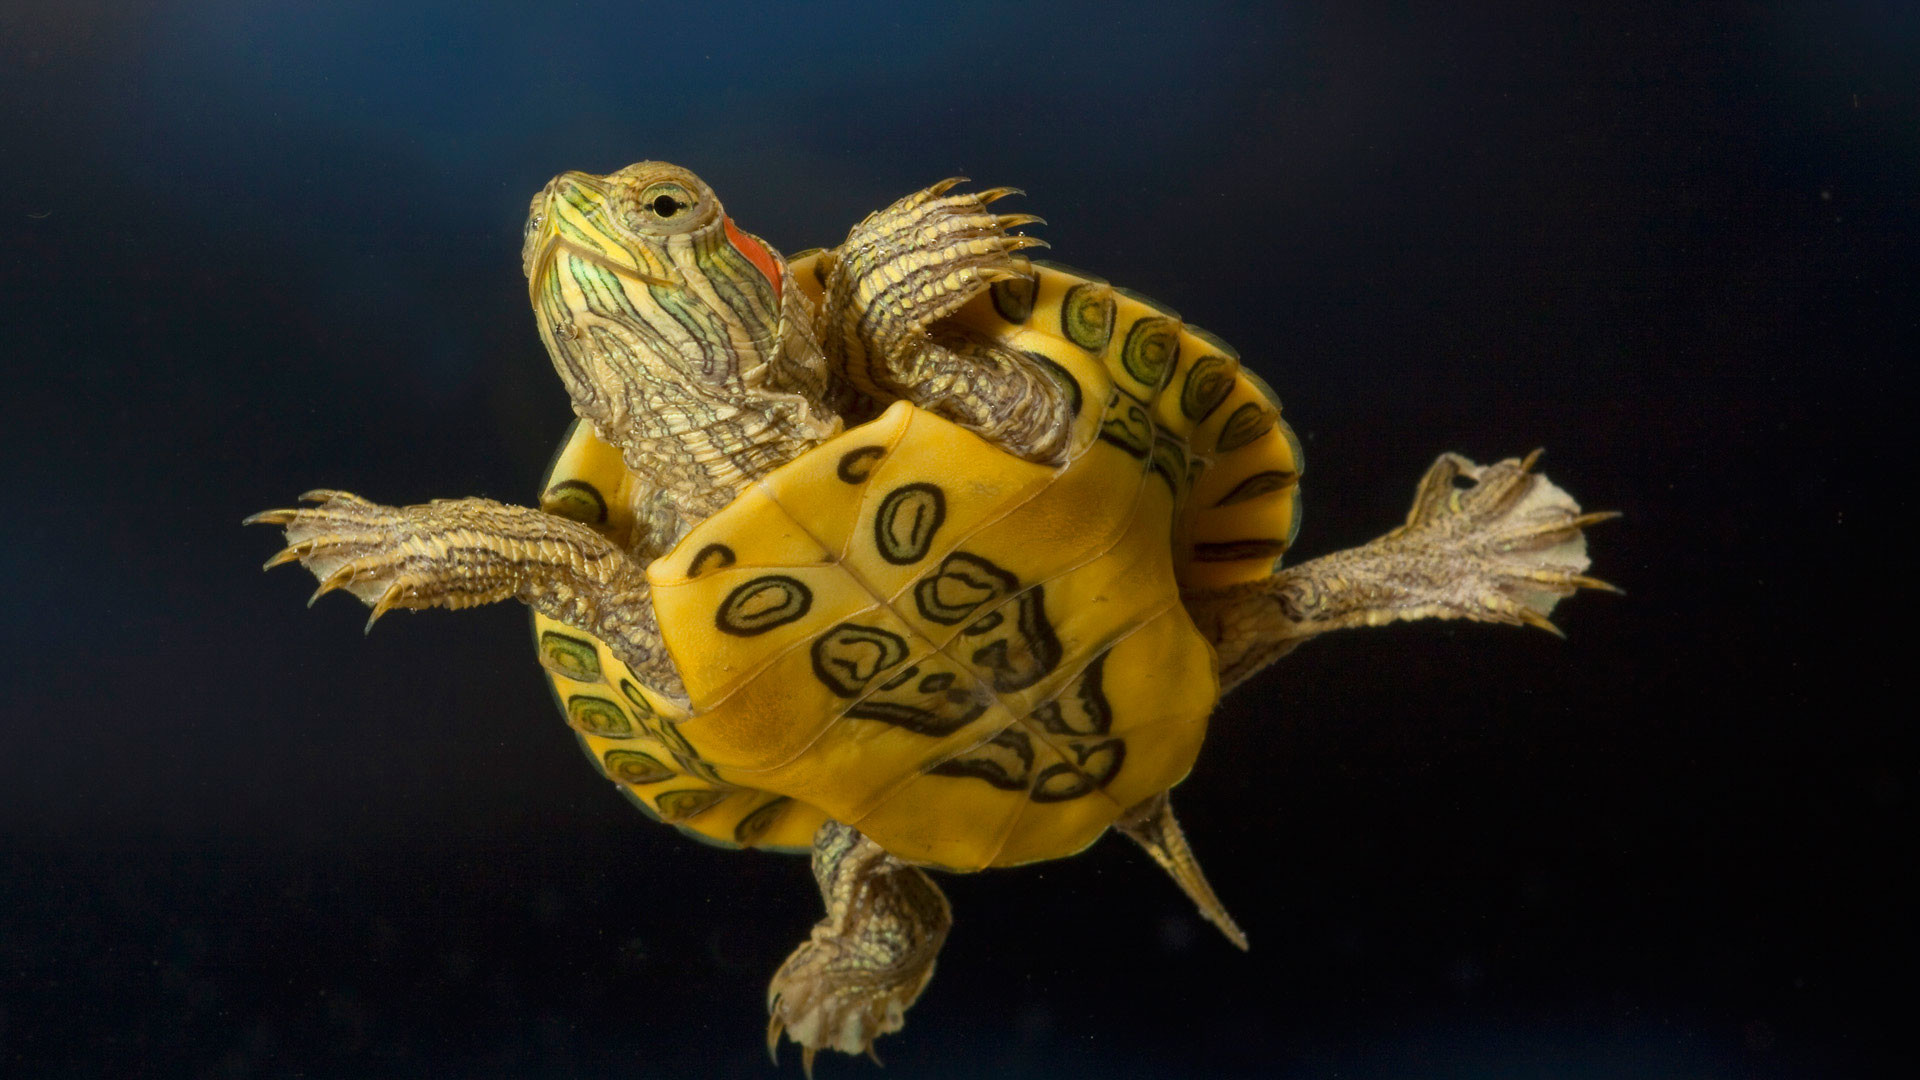 Hd pics photos animals sea turtle super desktop background wallpaper